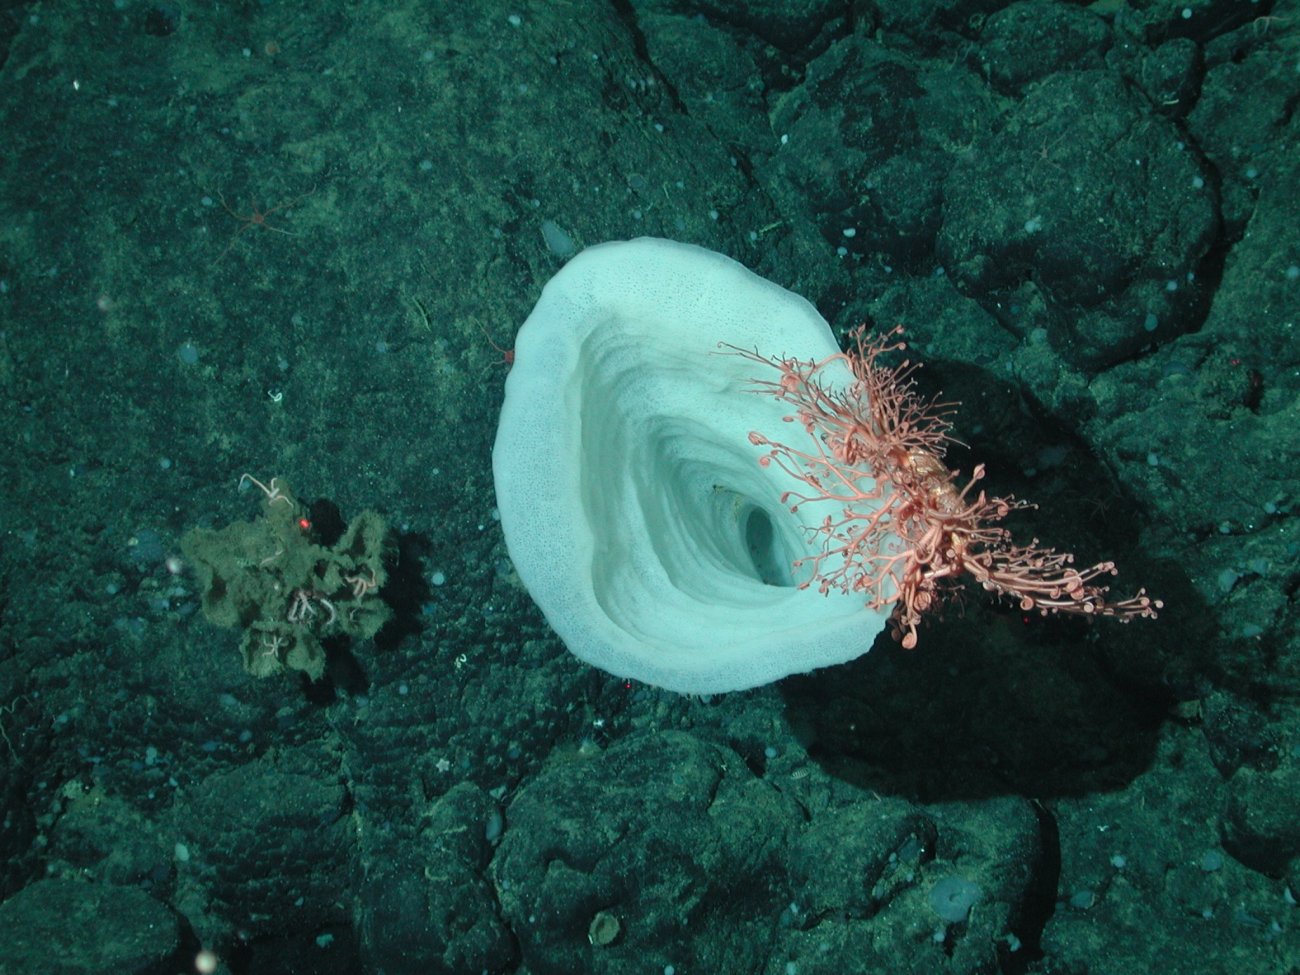 Bubblegum coral (Paragorgia arborea) growing next to a white trumpet sponge